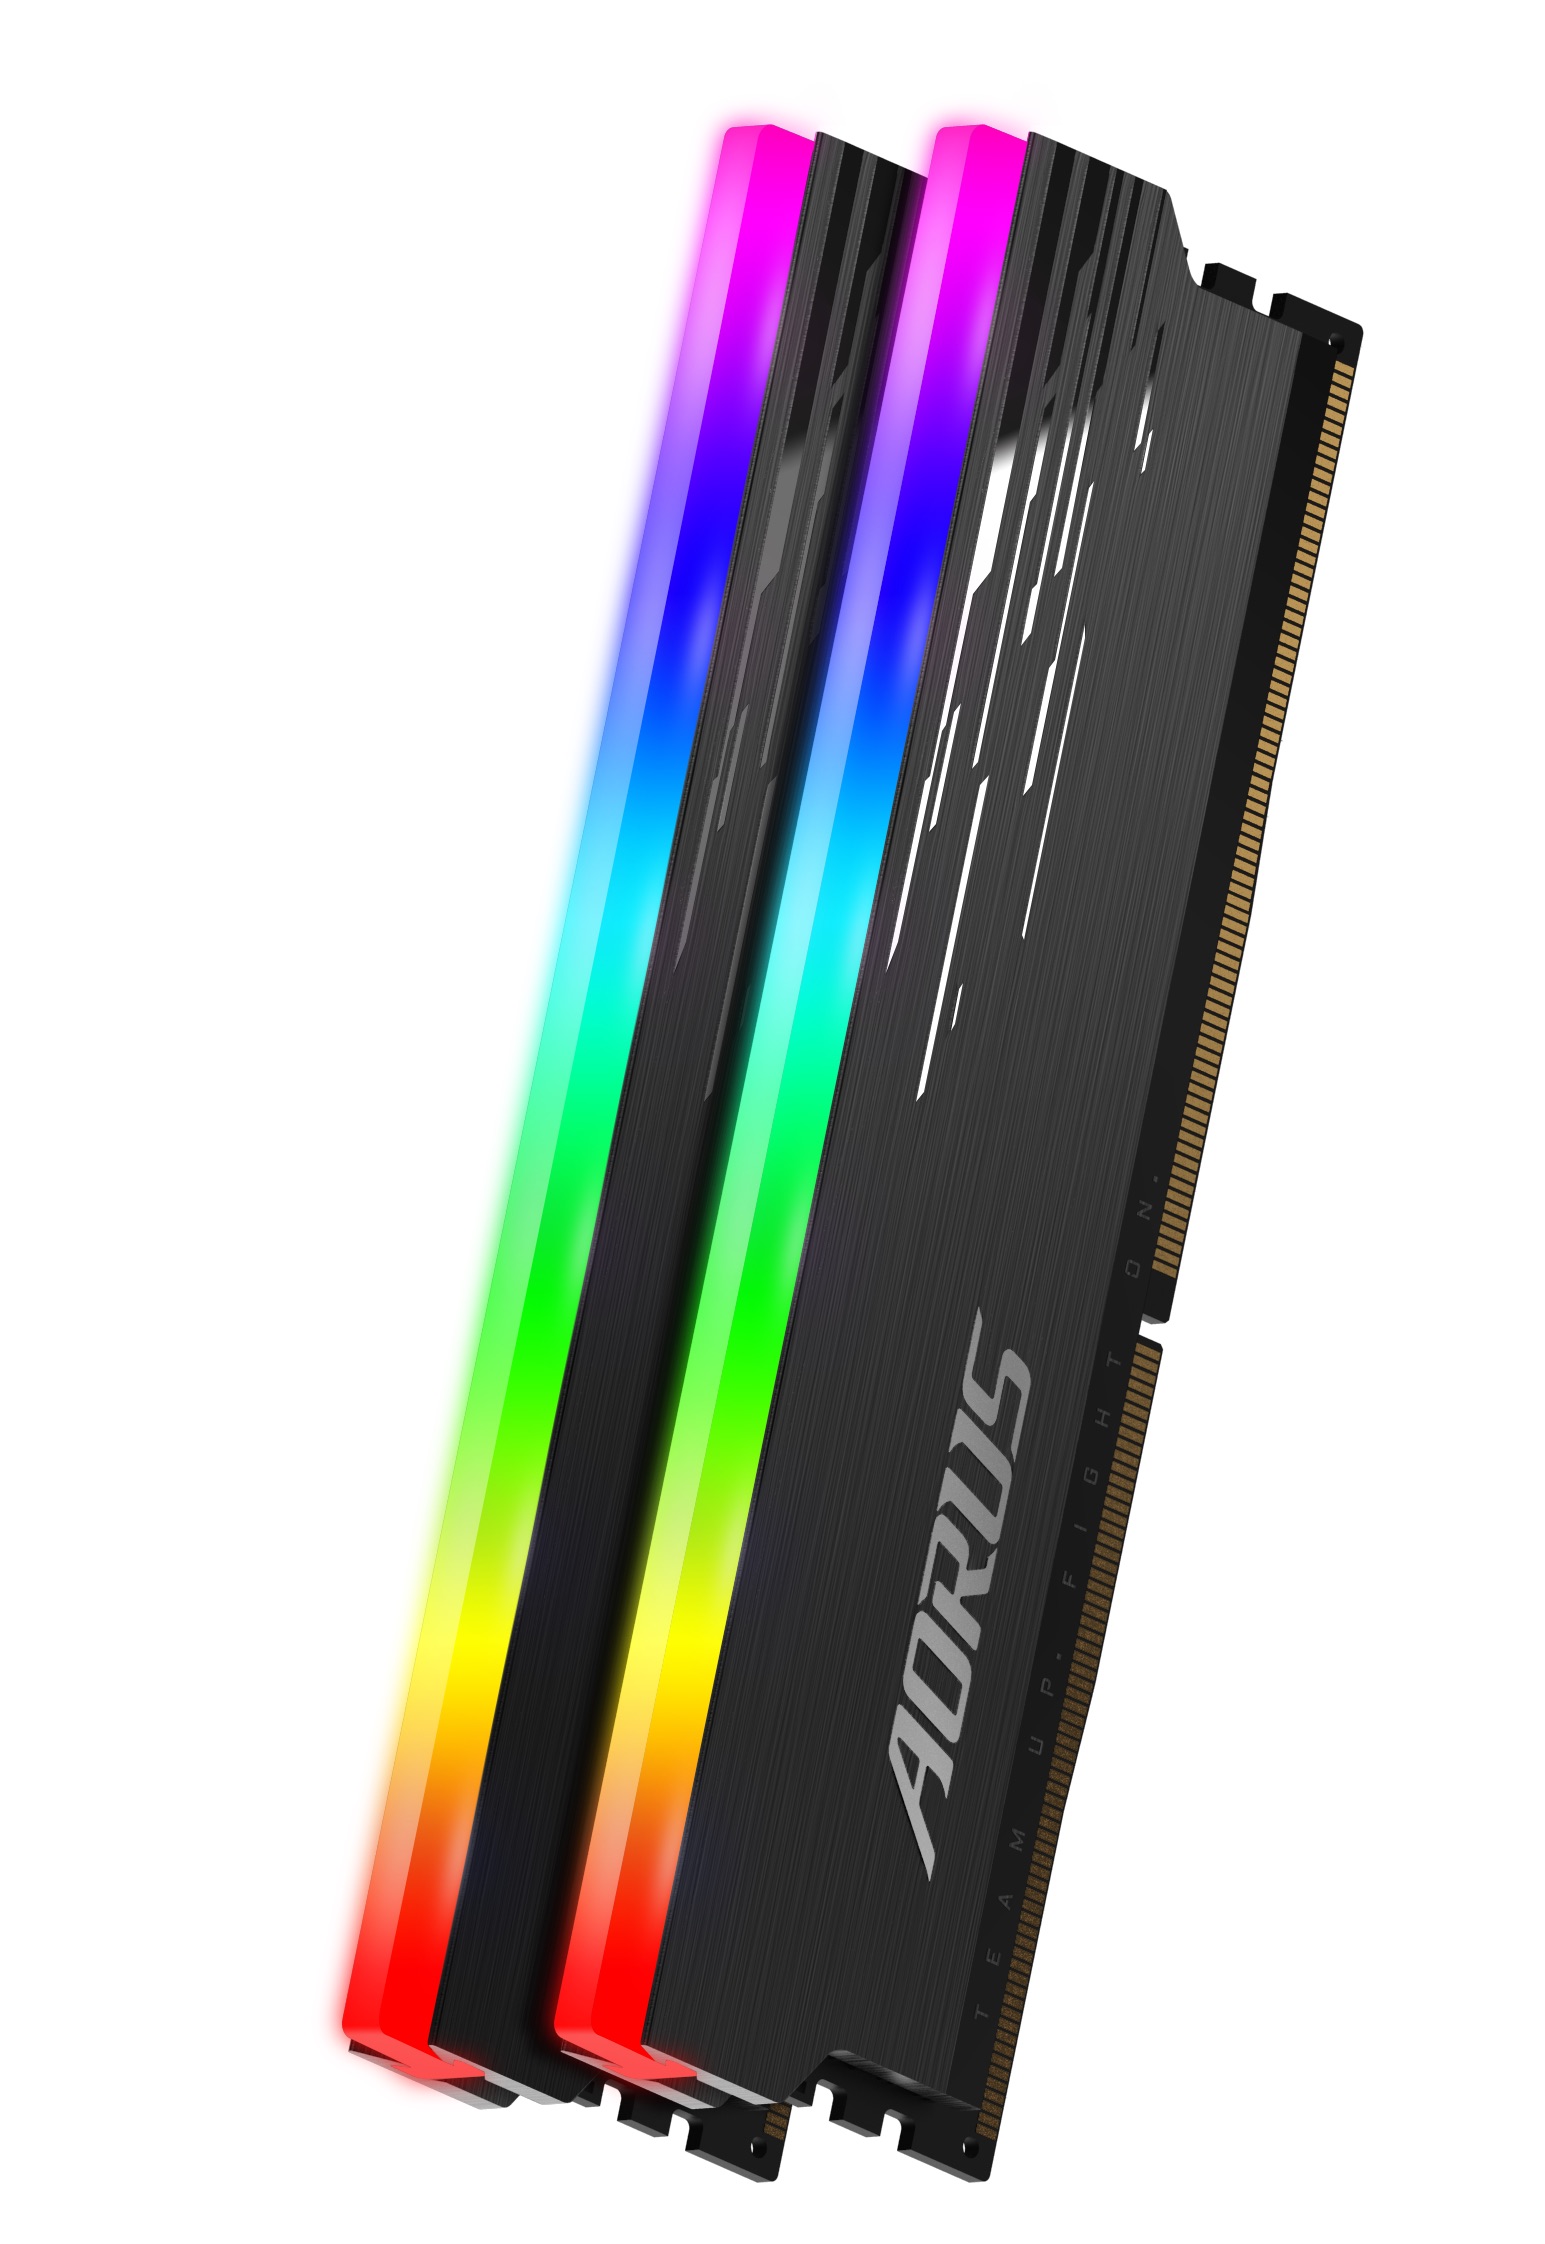 GIGABYTE giới thiệu bộ nhớ AORUS RGB 4400 MHz 16GB